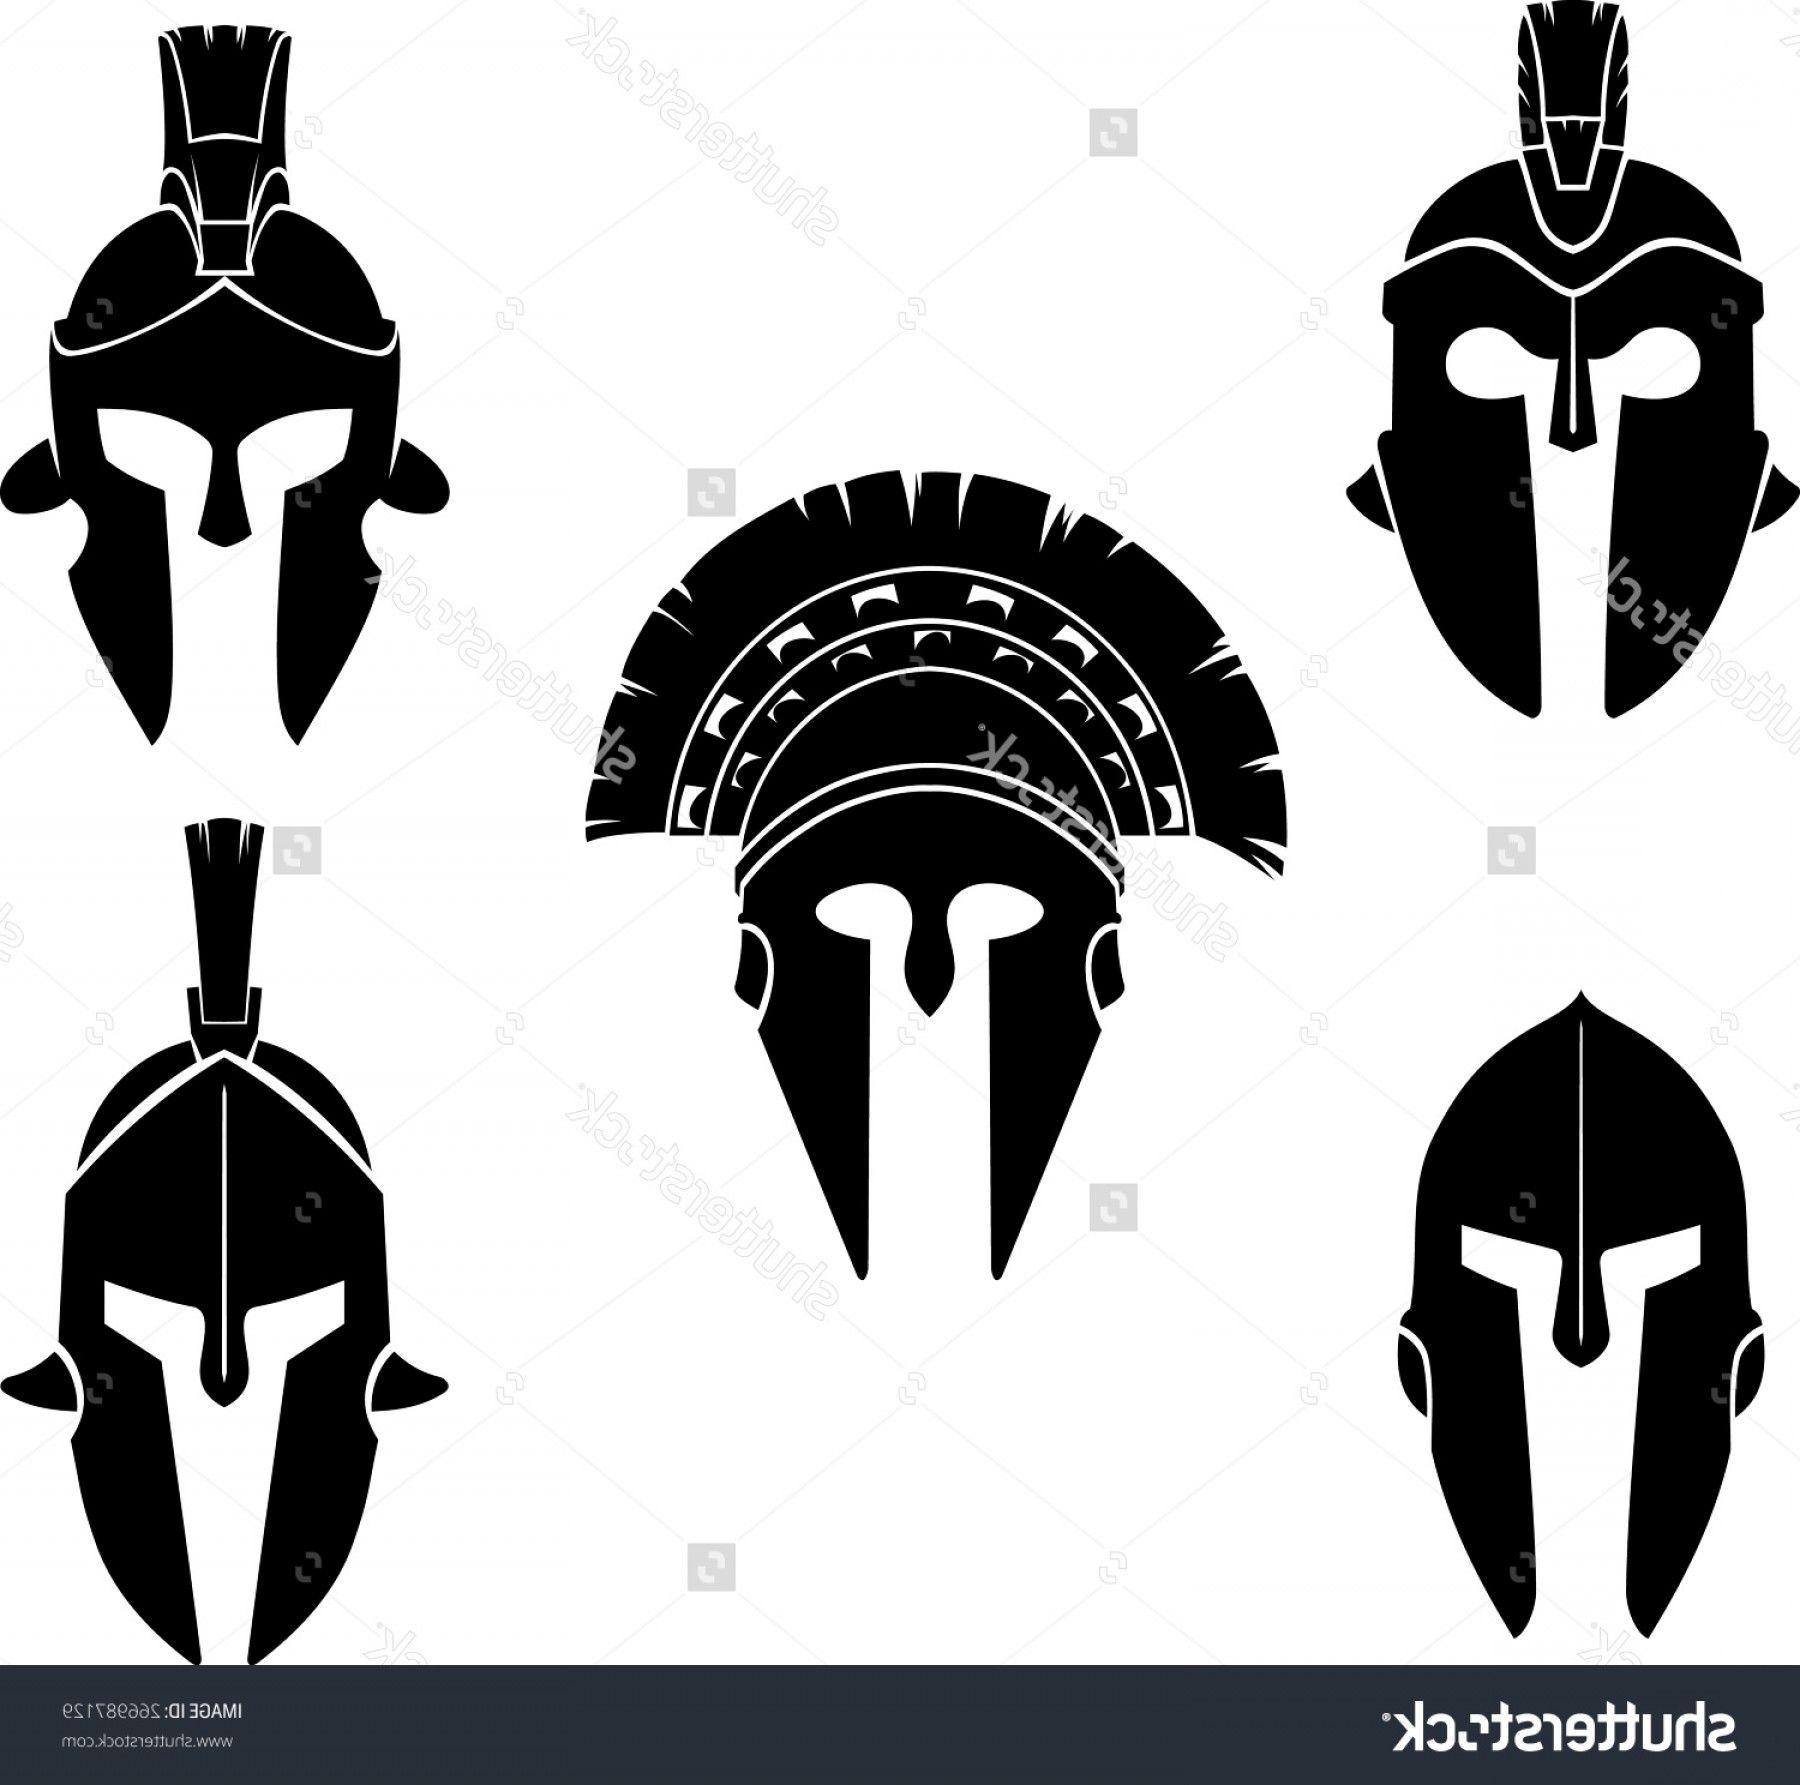 Black and White Spartan Logo - Excellent Spartan Vector Art Draw: HD Spartan Helmet Clip Art Black ...